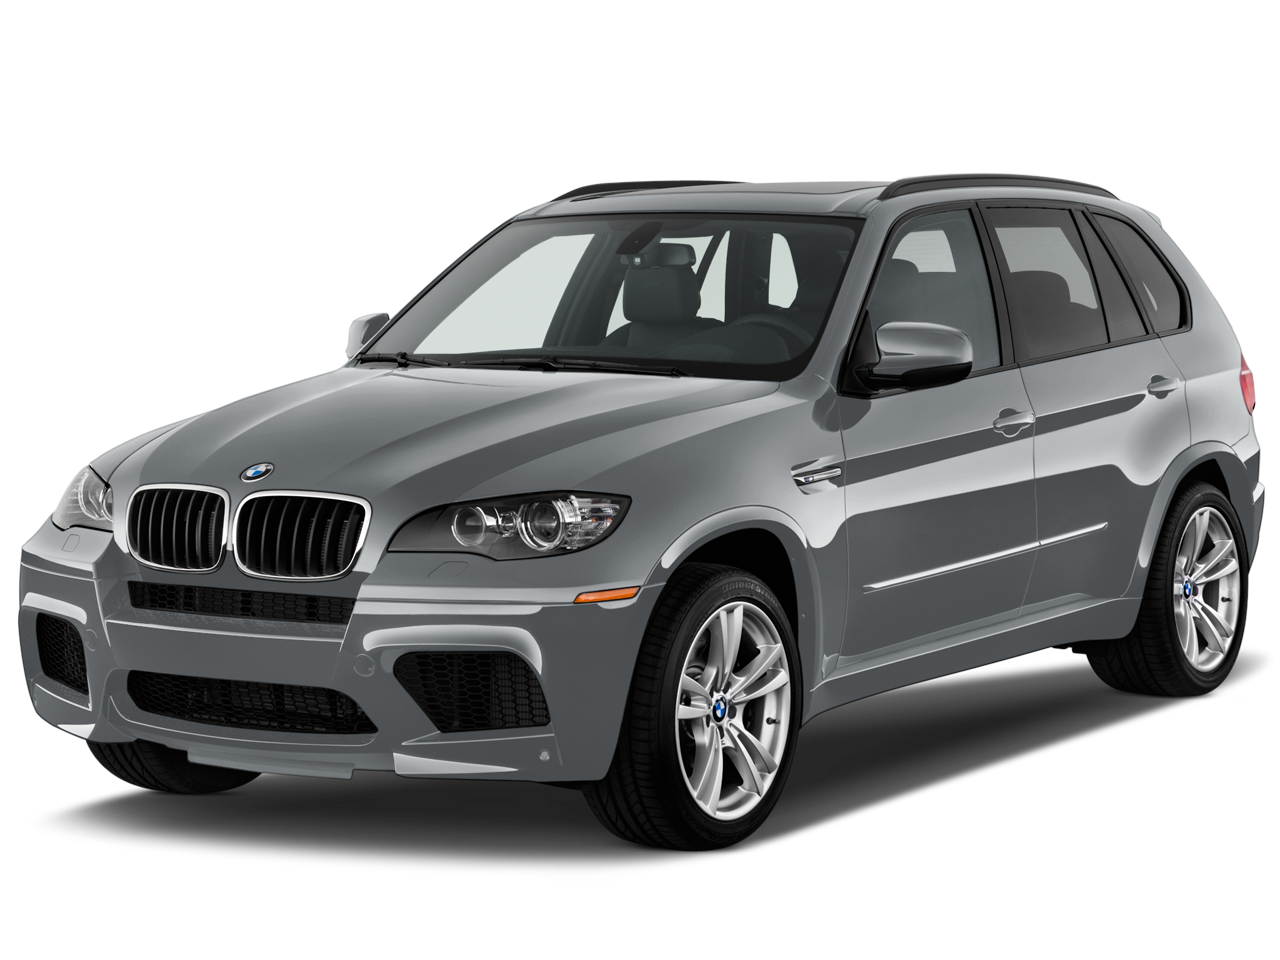 gray x5 BMW PNG image, free download